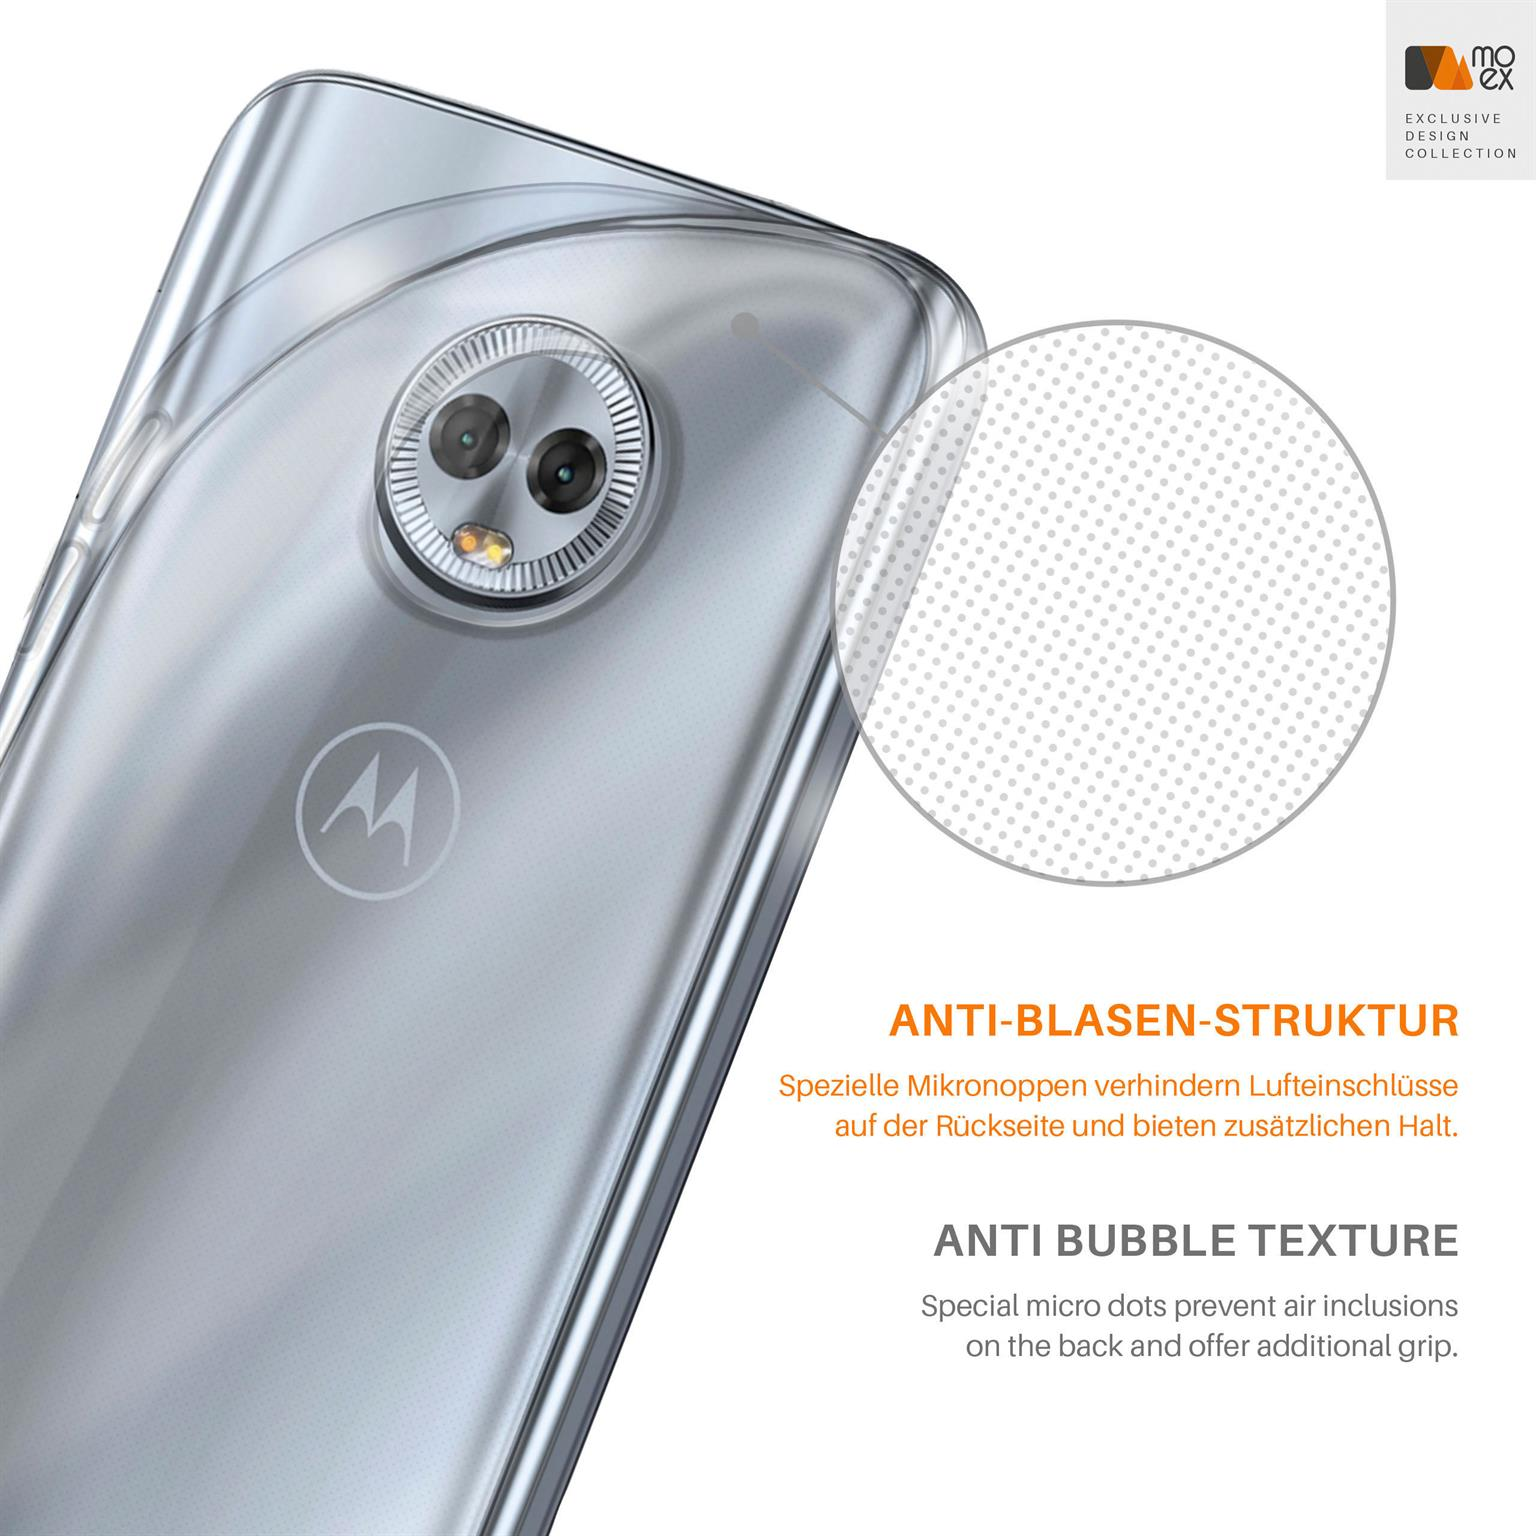 MOEX Aero Case, Backcover, Motorola, Crystal-Clear Moto G6